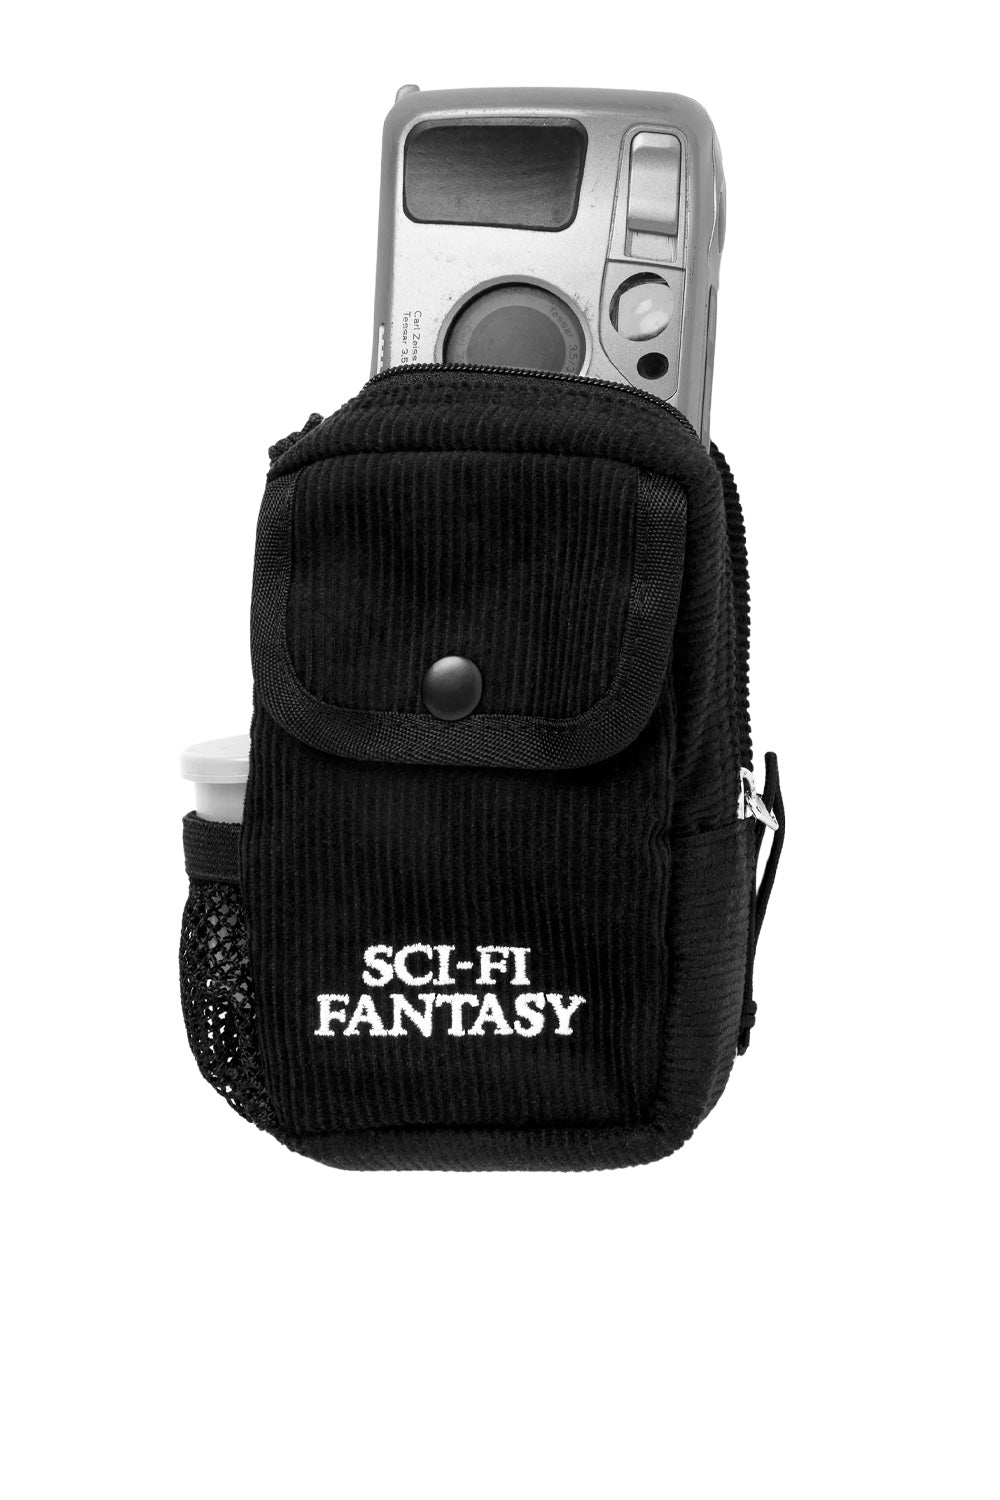 Sci-Fi Fantasy Camera Pack Black - BONKERS